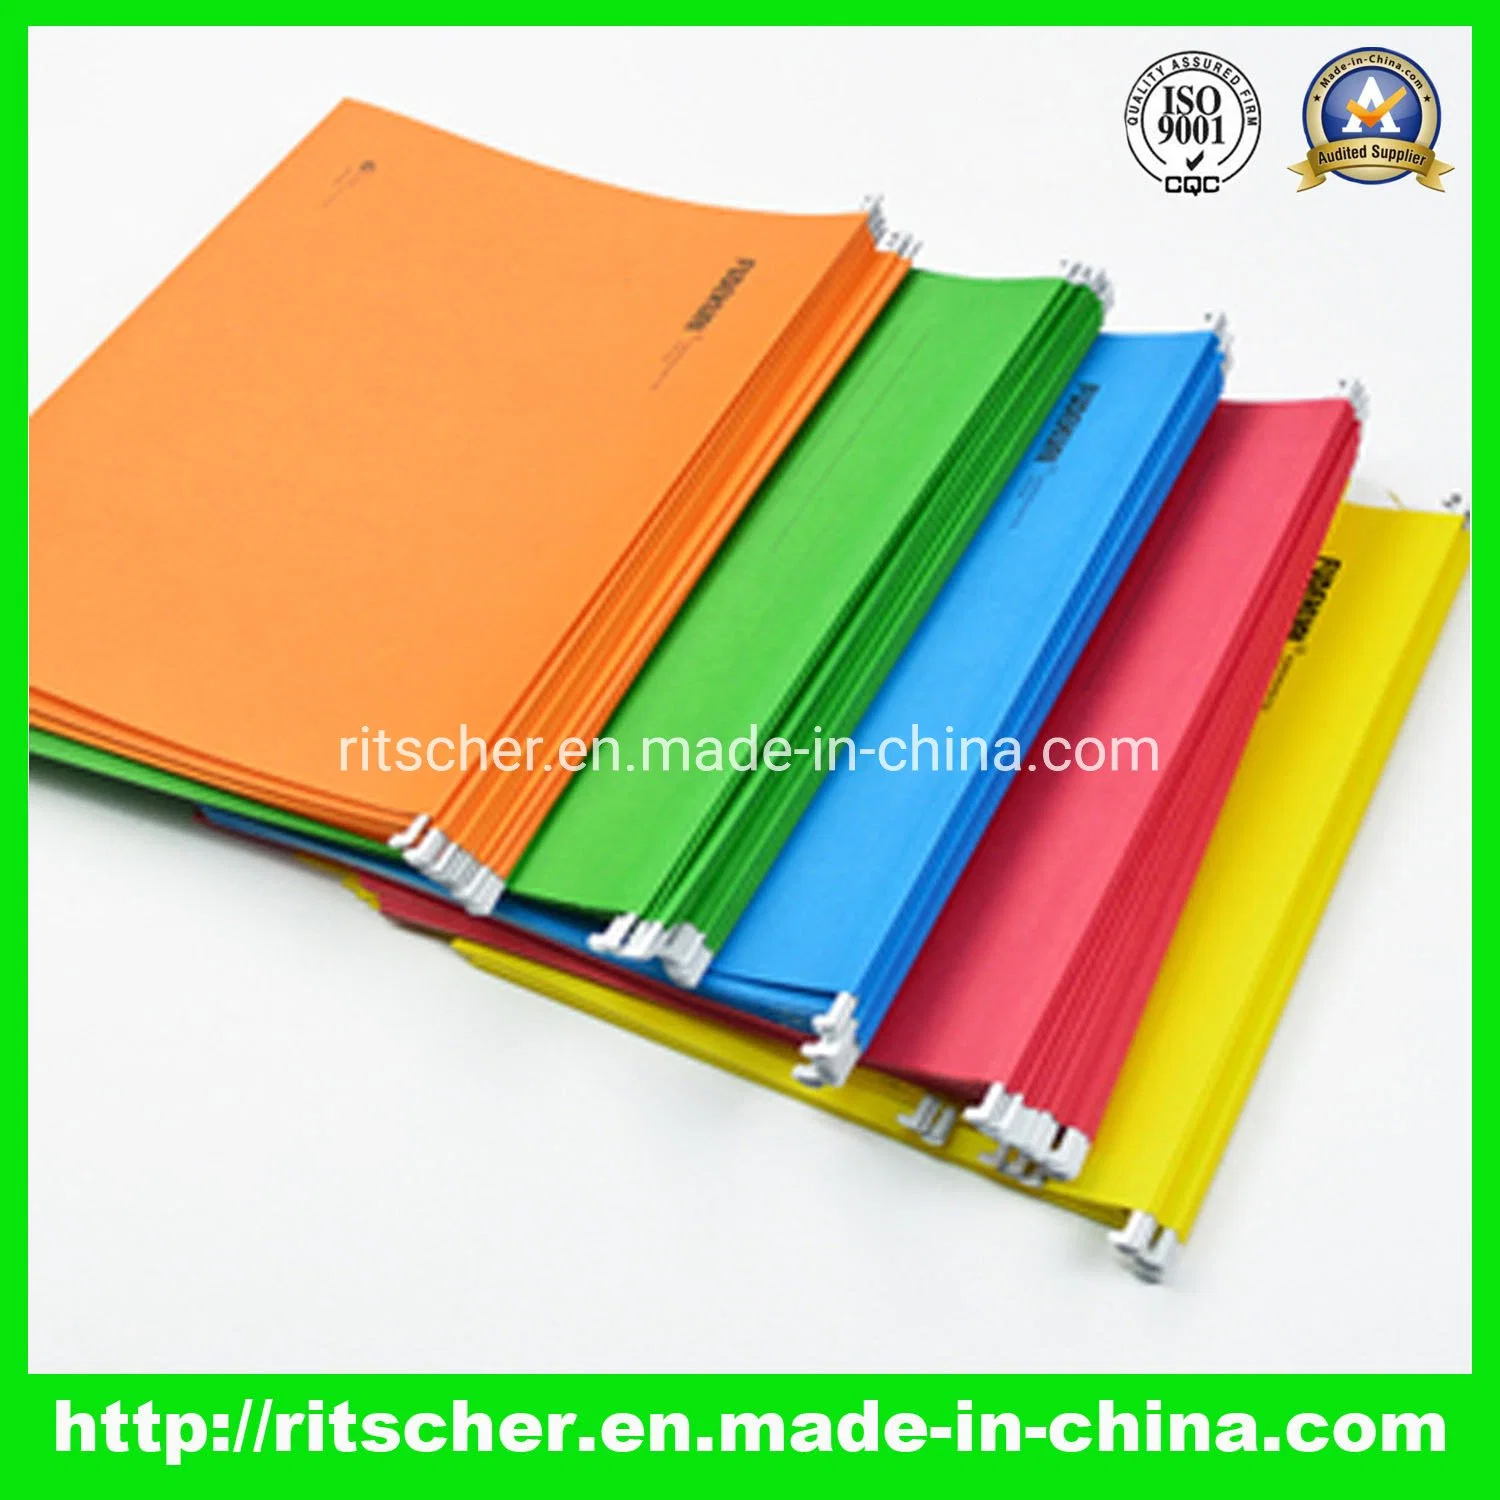 Plastic Paper Fastener of Office/School Stationery Certificate